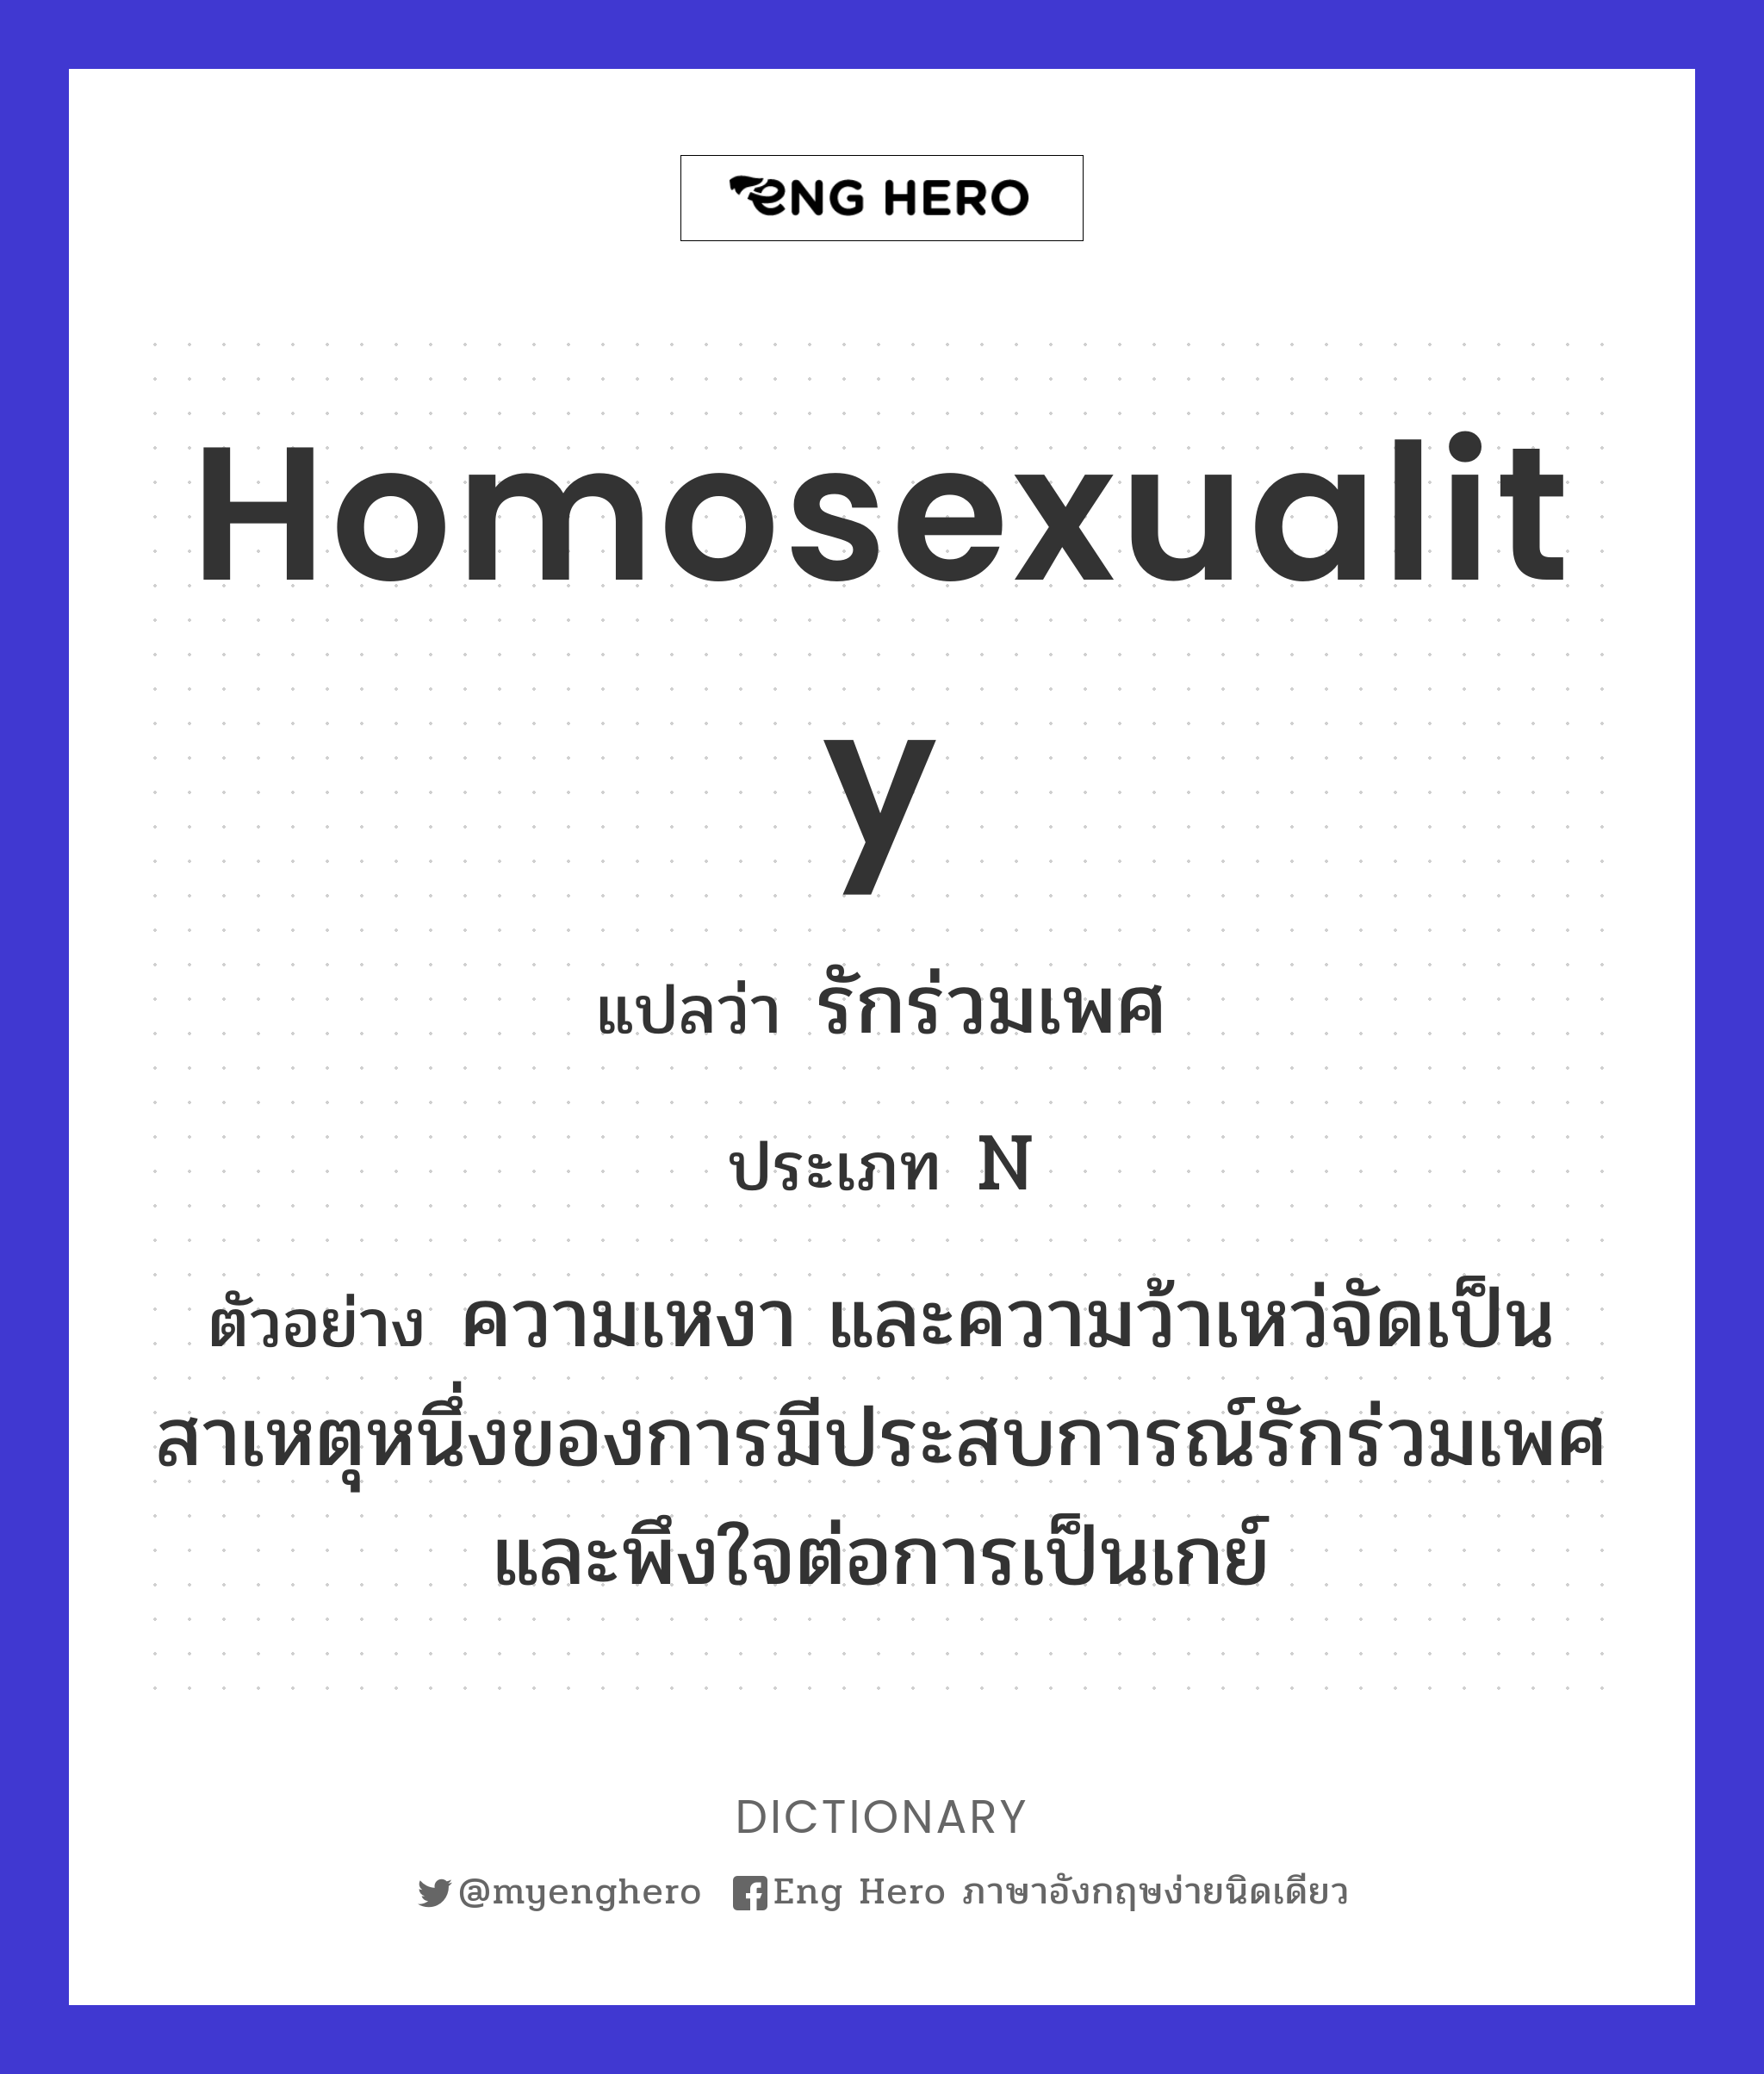 homosexuality